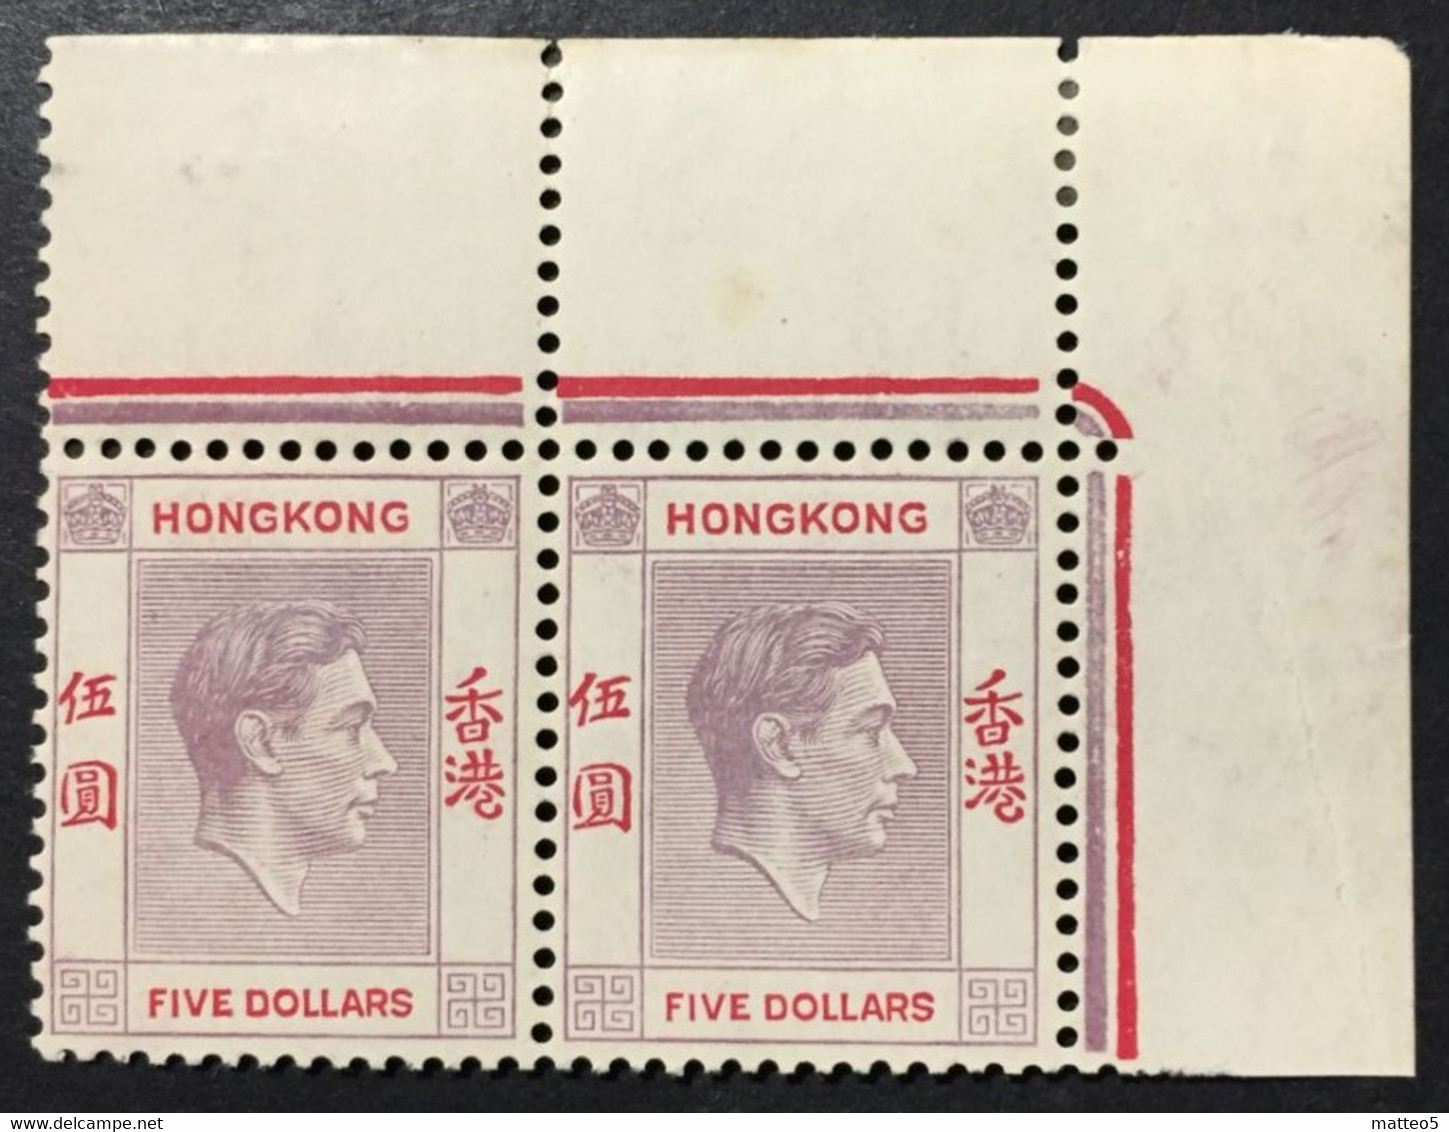 1938 -48 - Hong Kong - King George VI - Five Dollars - 2 Stamps - New - Unused Stamps